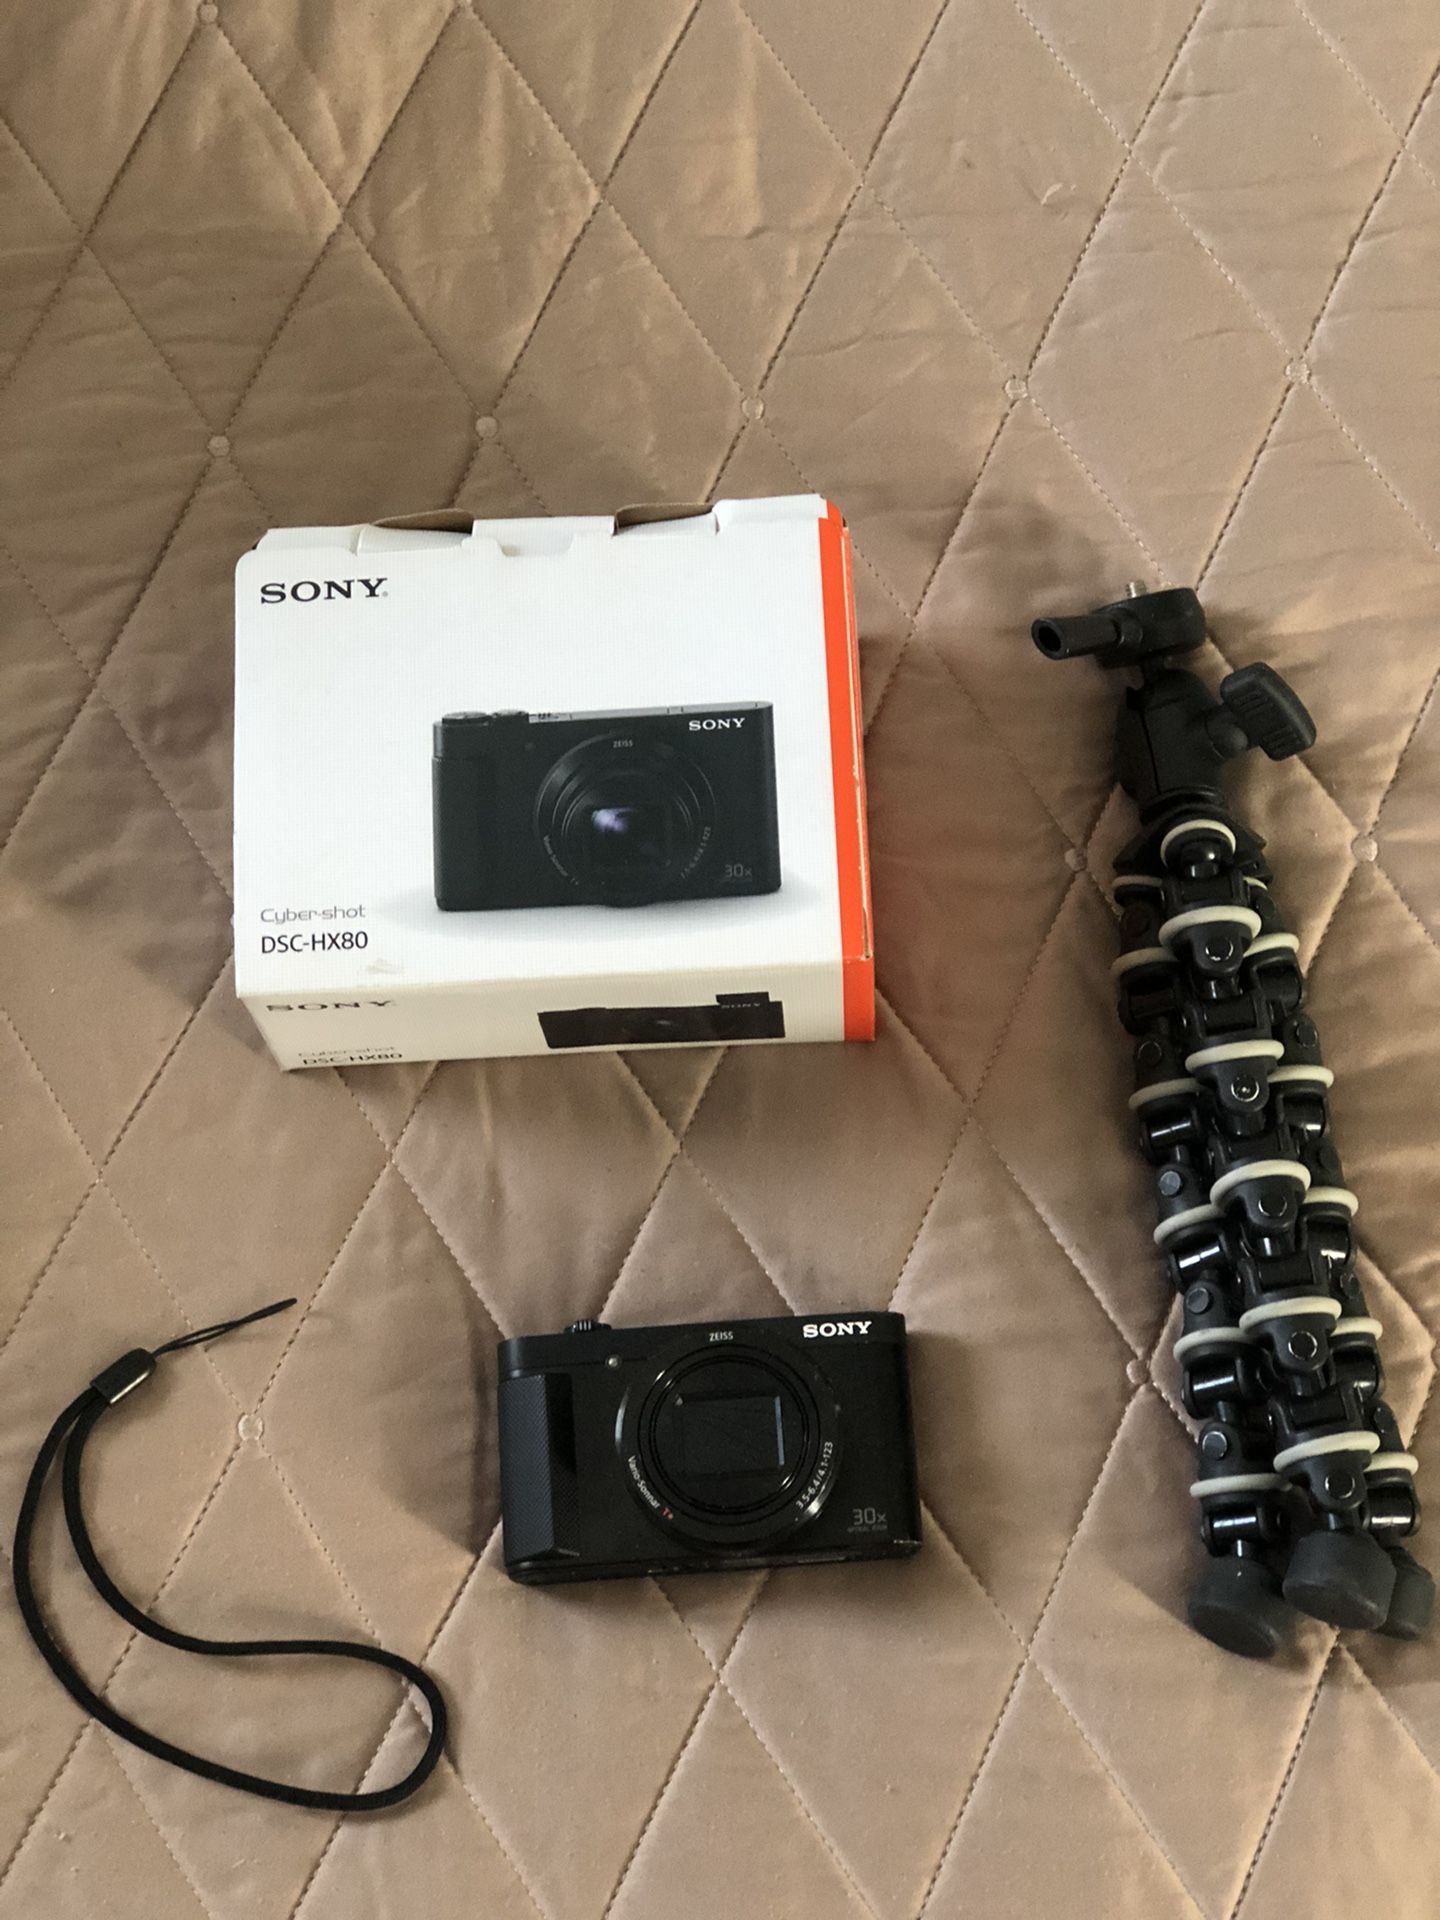 sony camera DSC-HX80 cyber shot